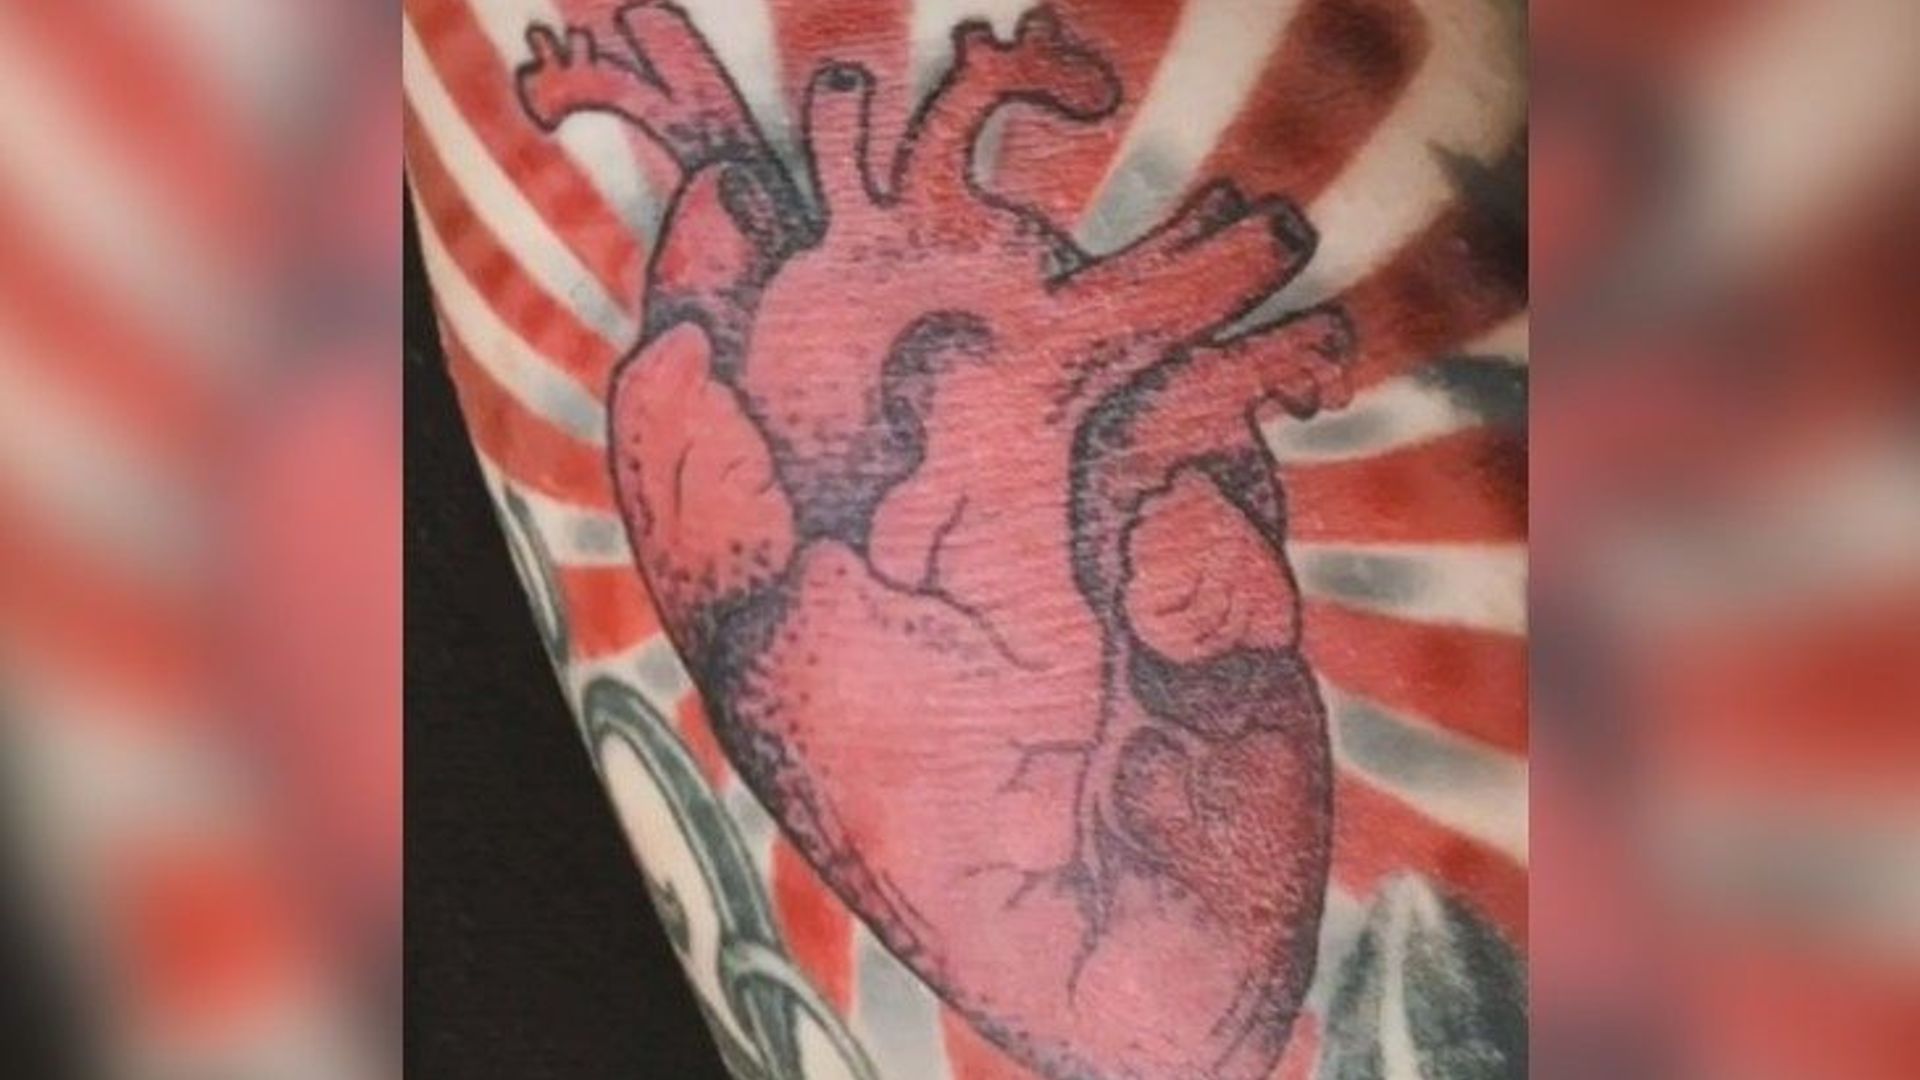 Bella Poarch's scandalous tattoo